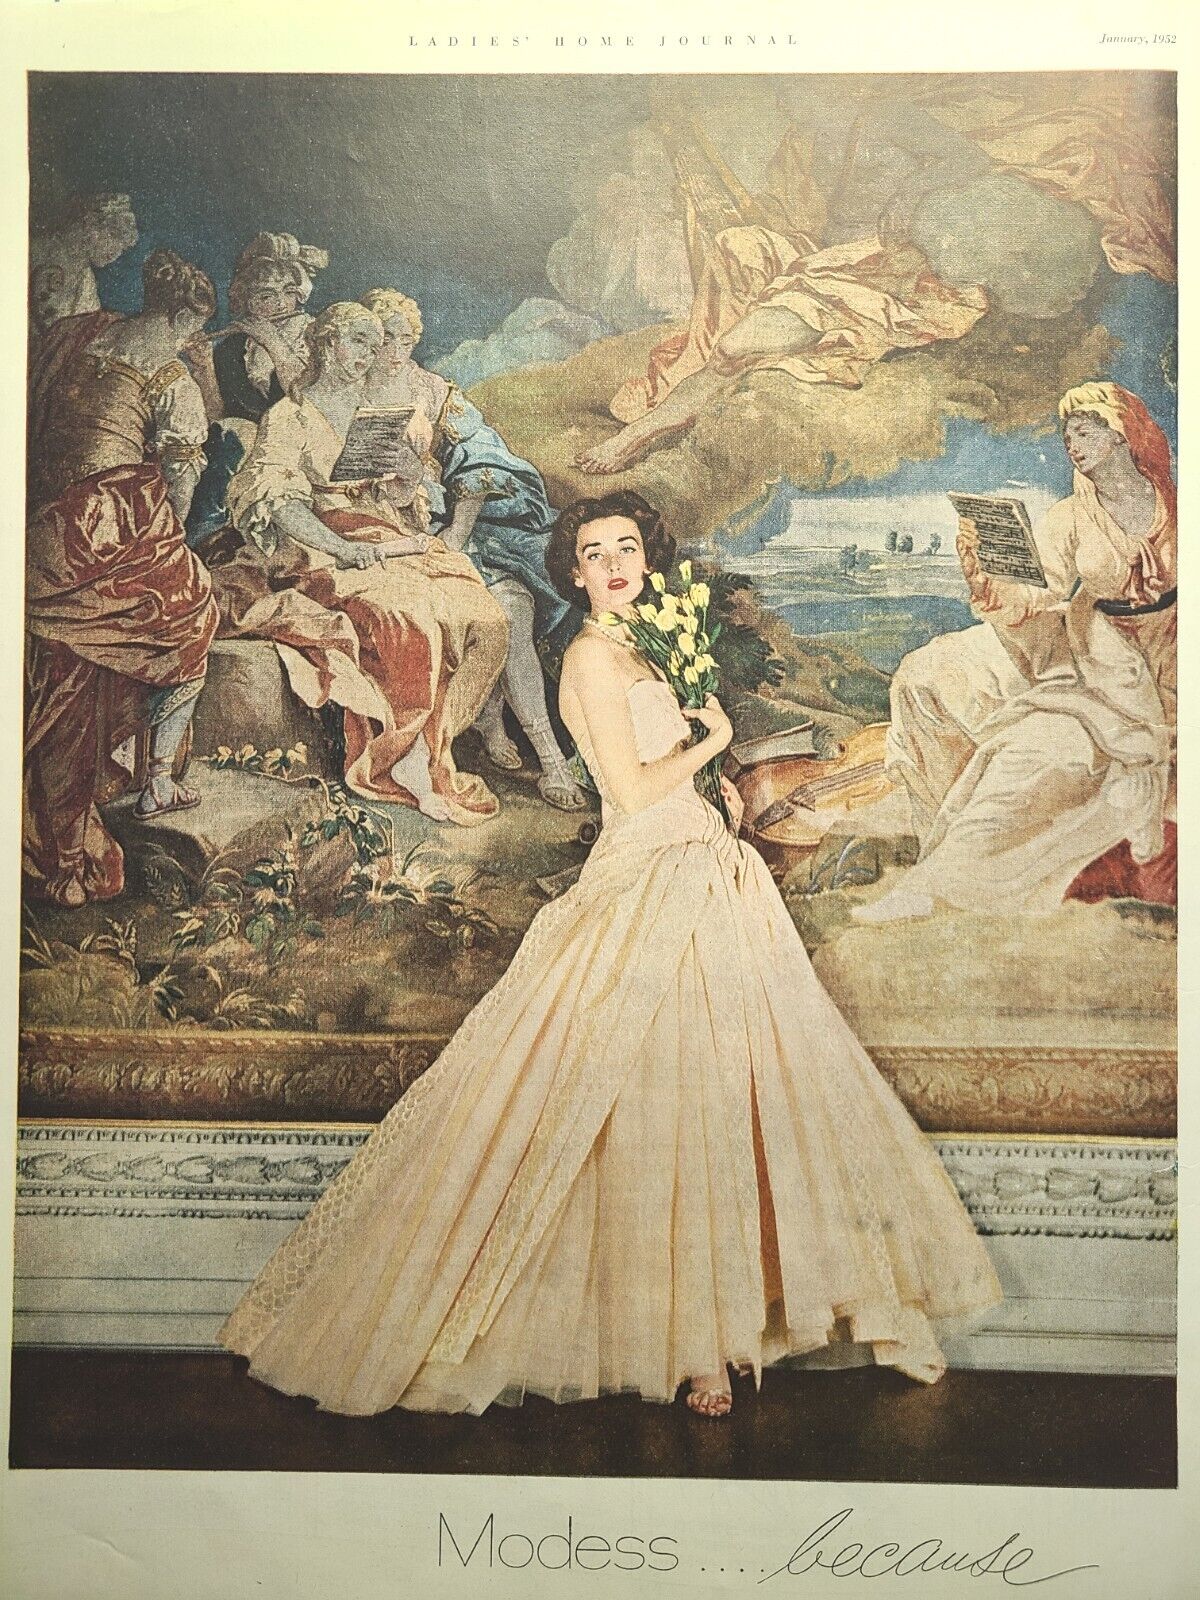 Modess ... Because Femanine Hygeine Evening Tapestry Gown Vintage Print Ad 1952